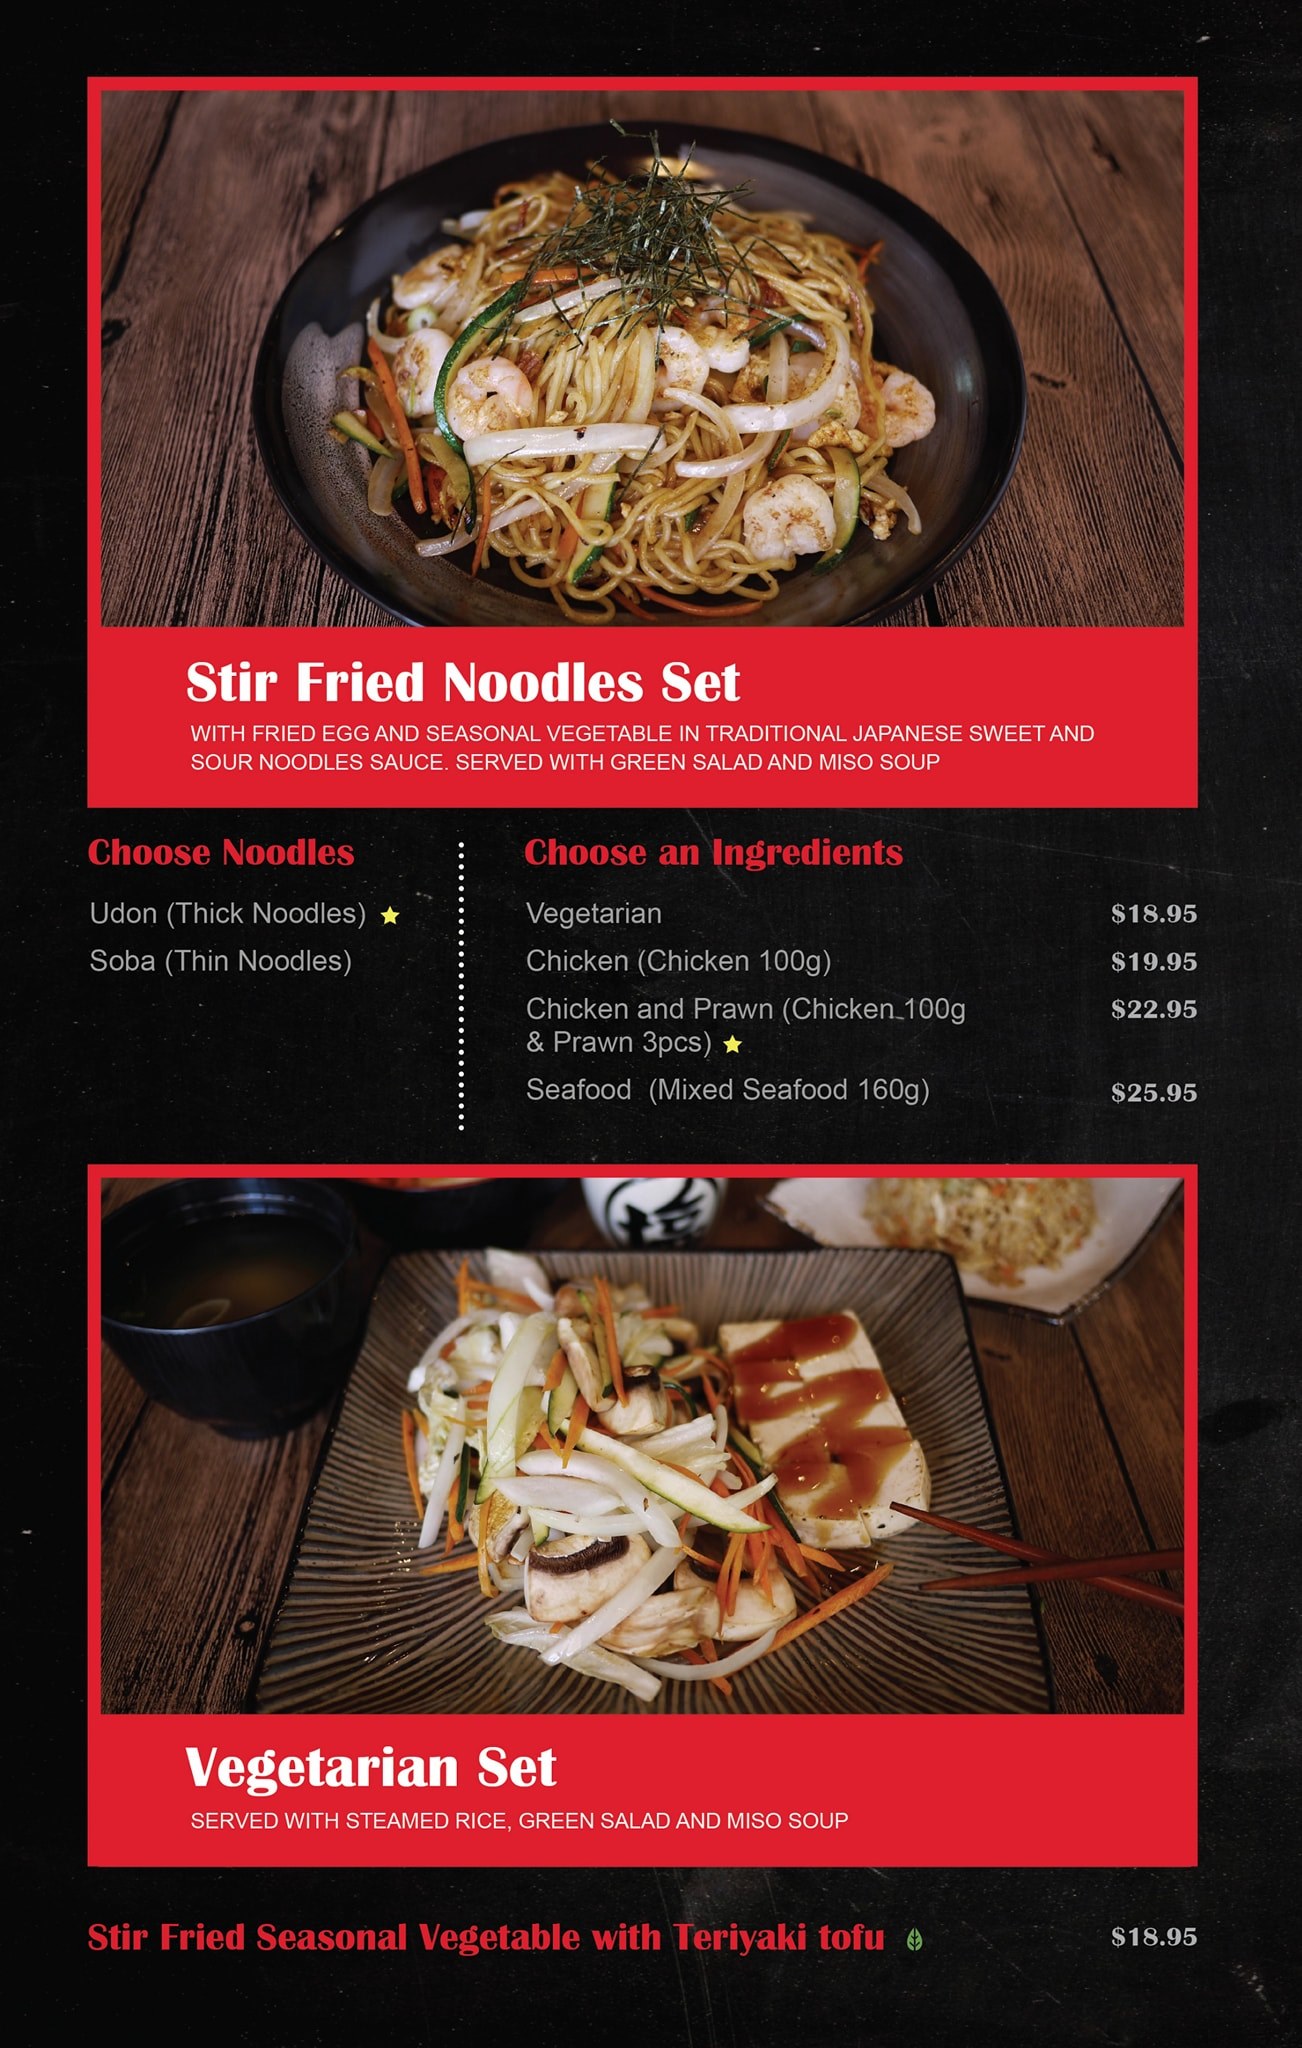 Arigatou Teppanyaki Japanese Restaurant Broadbeach Gold Coast - QLD | OBZ Online Business Zone